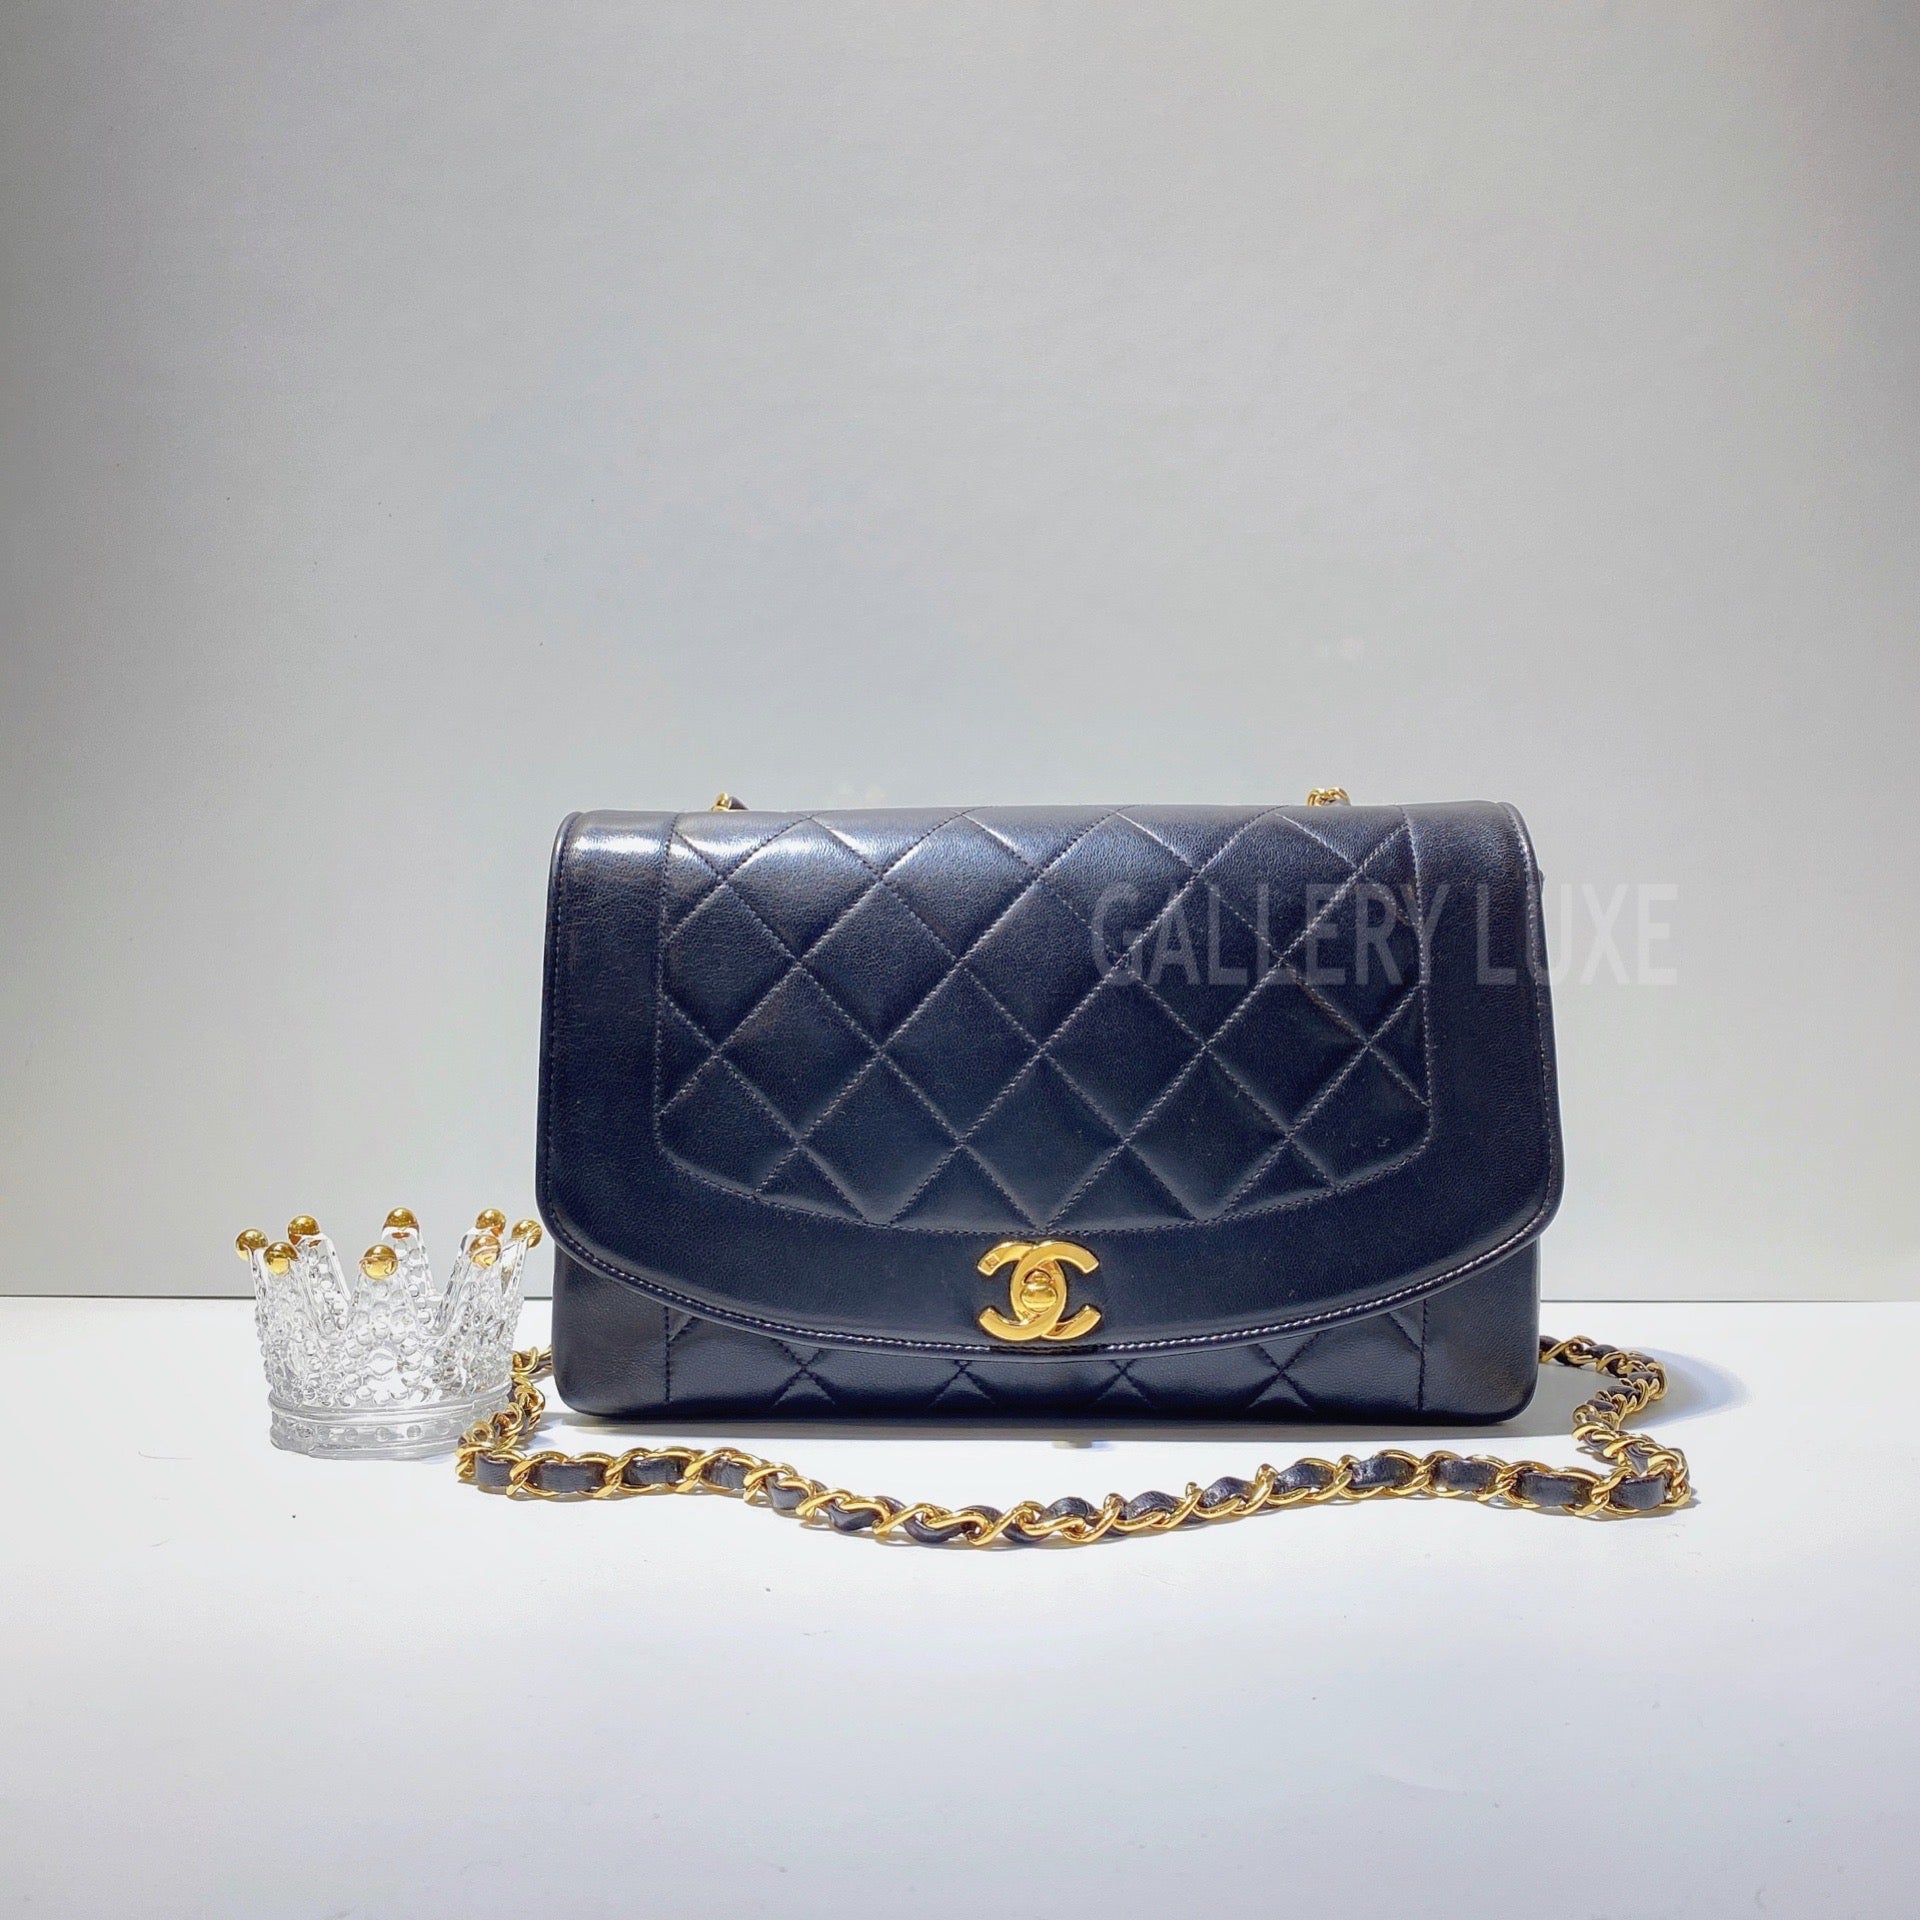 No.2483-Chanel Vintage Diana 25cm – Gallery Luxe